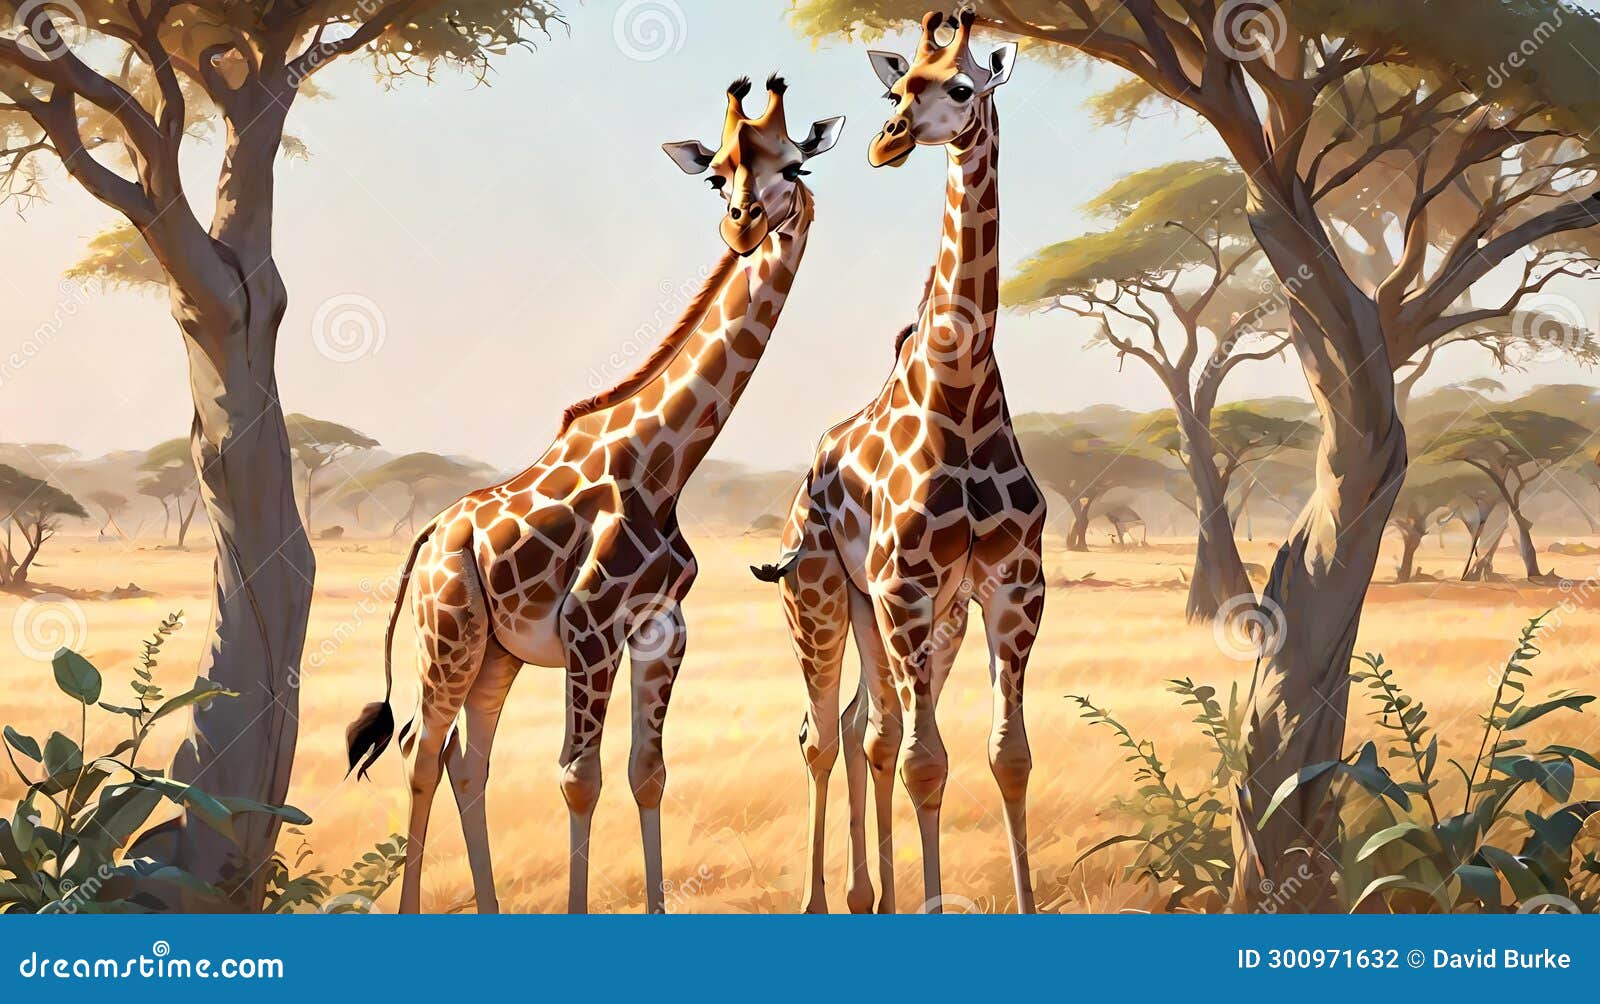 giraffe giraffa pair african hoofed mammal trees